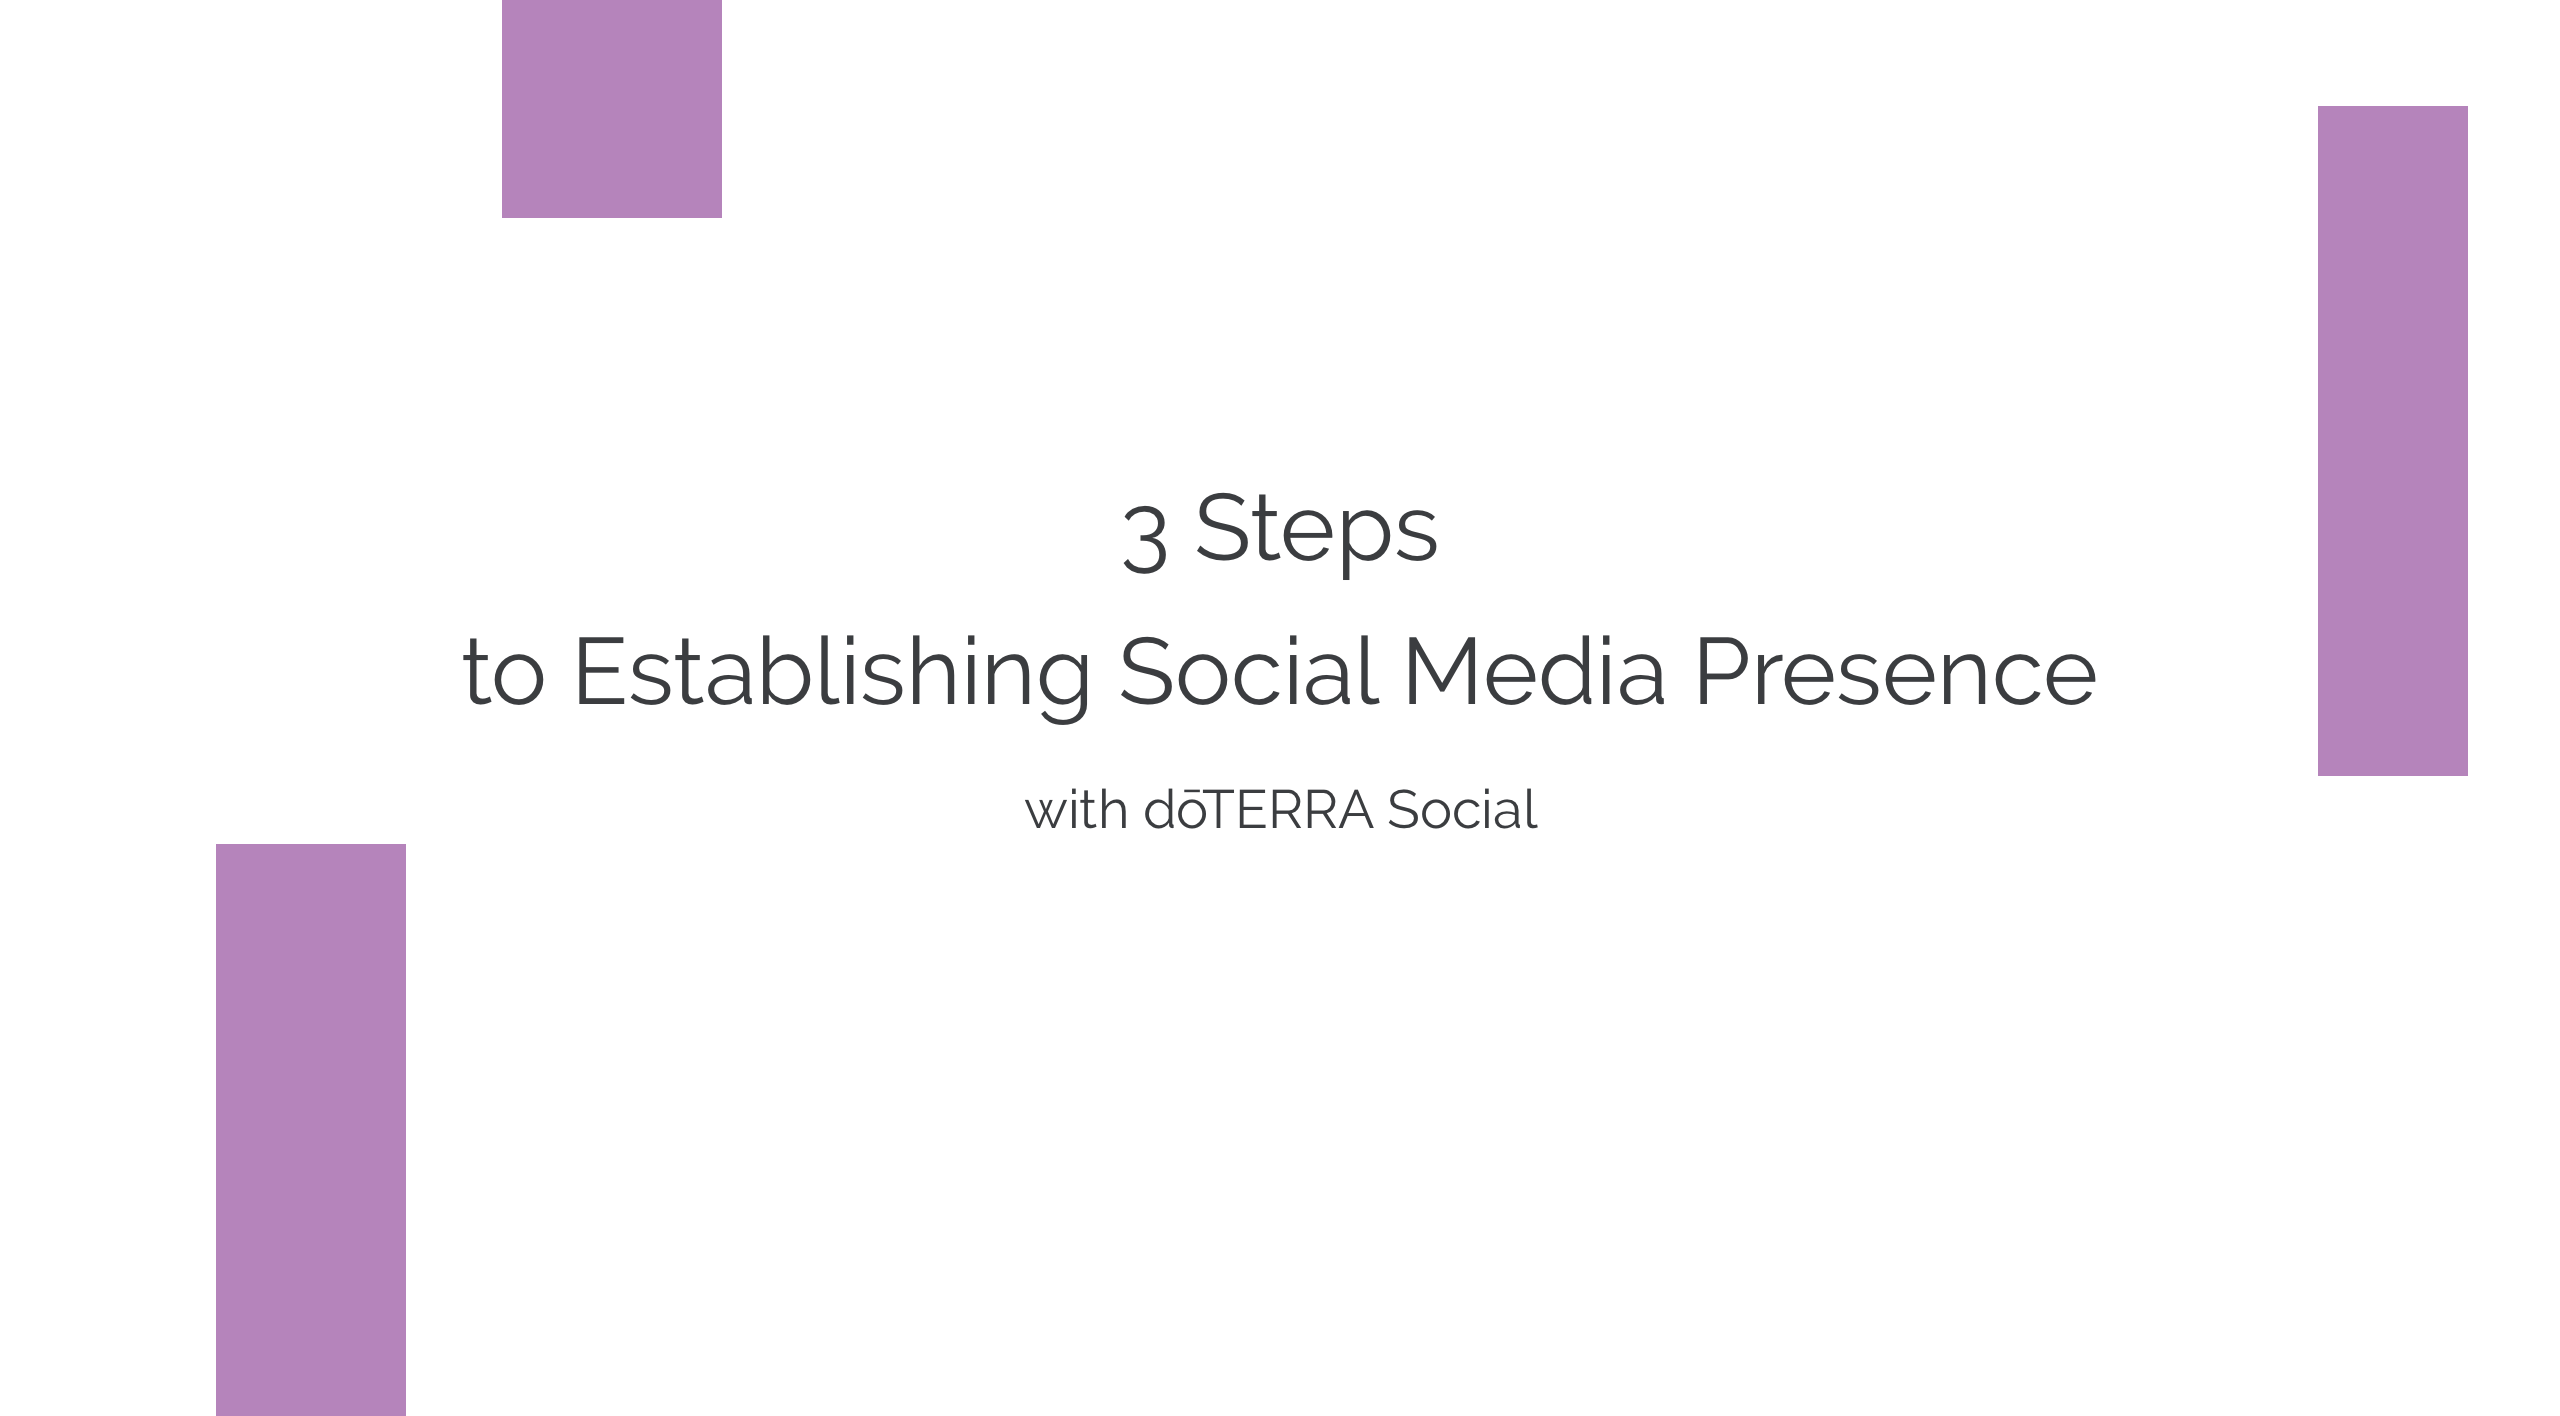 3 Steps to Establishing Social Media Presence with dōTERRA Social